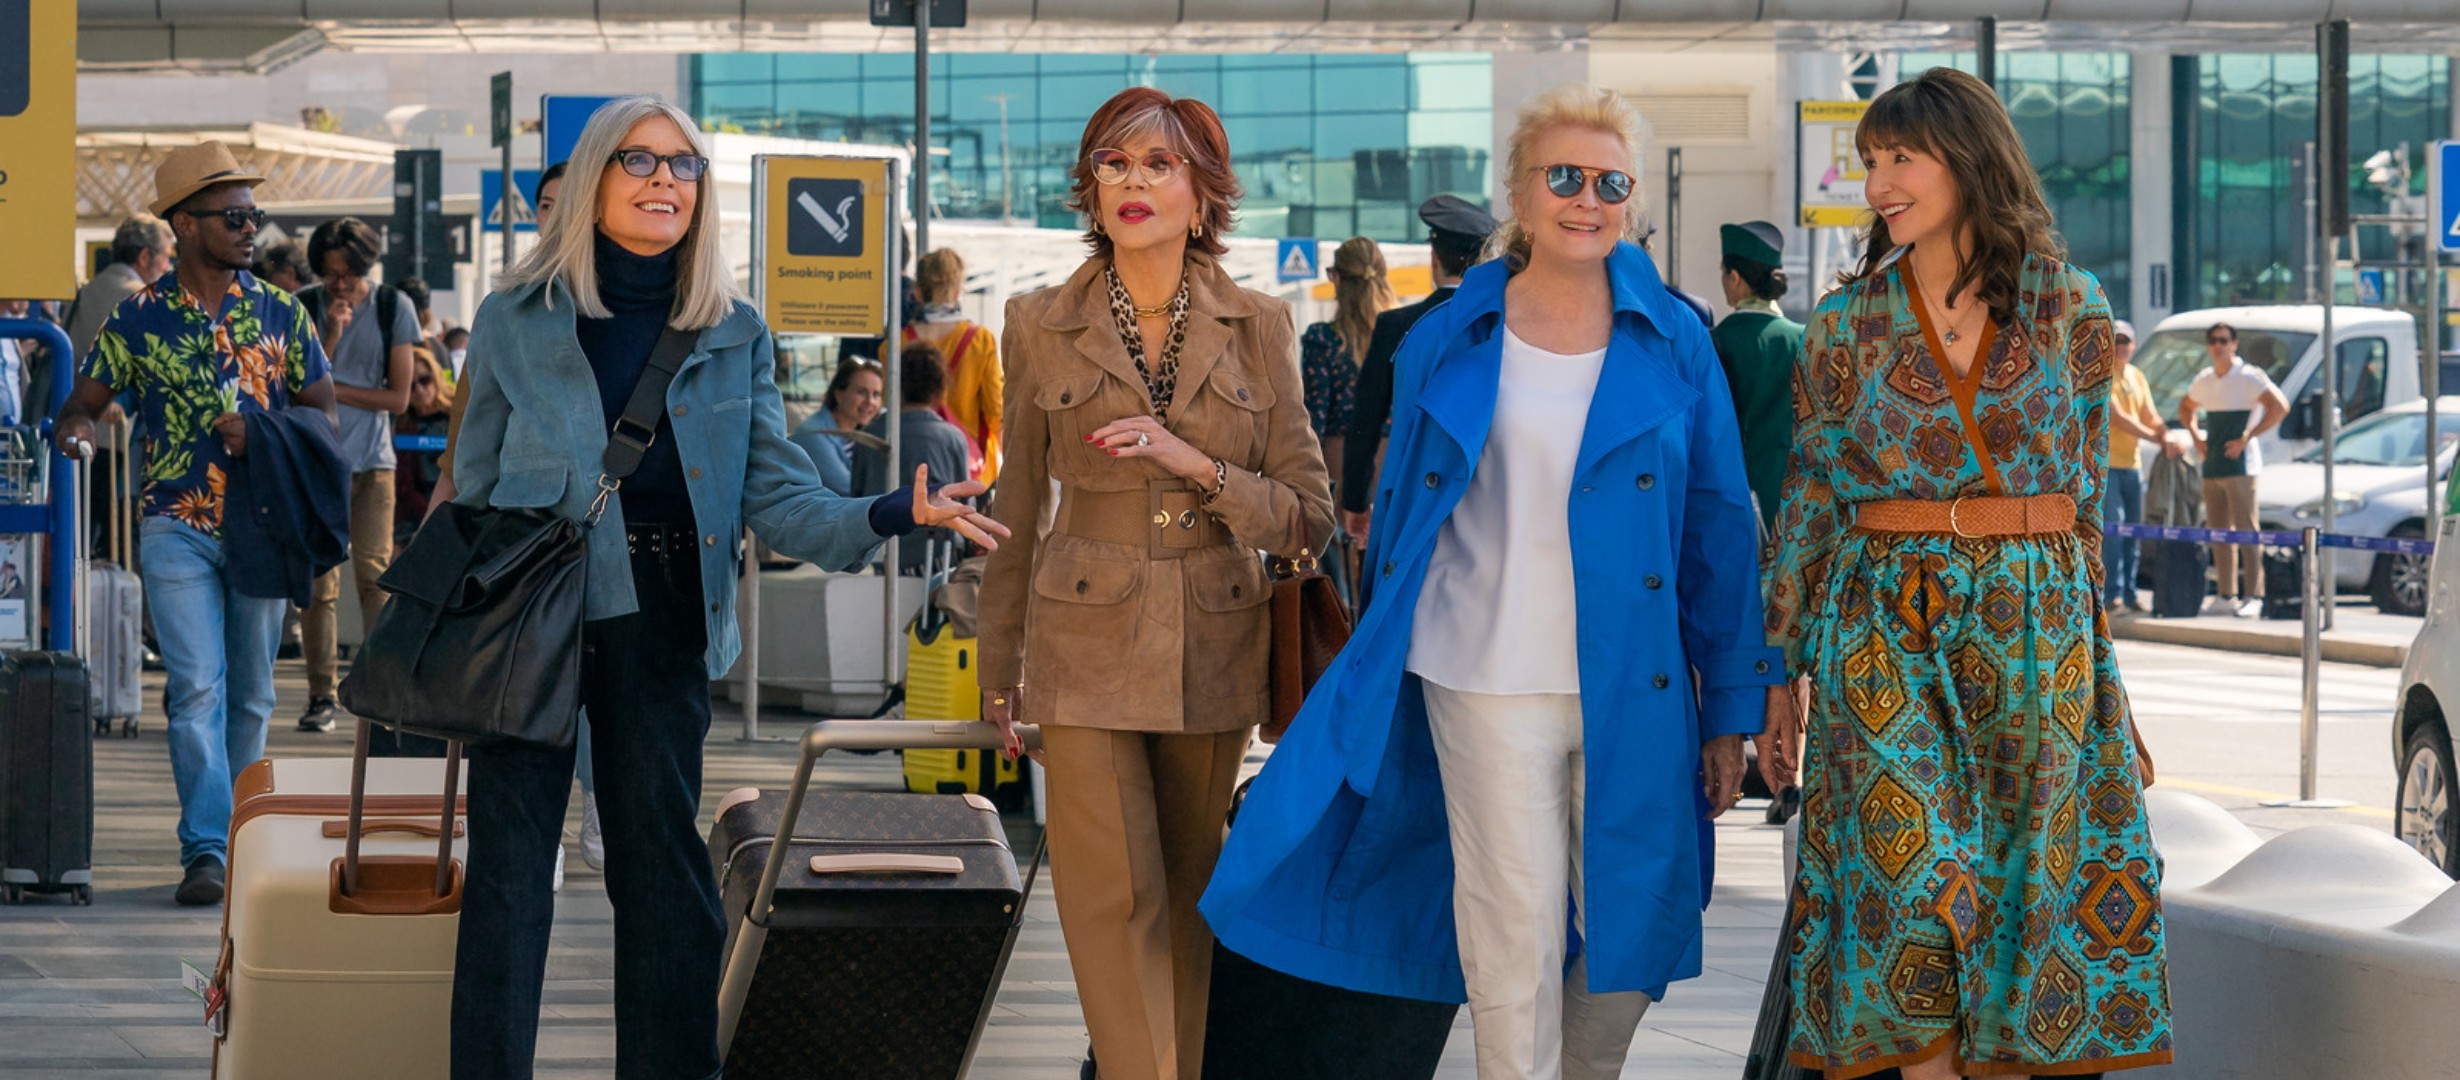 Diane Keaton, Jane Fonda, Candice Bergen and Mary Steenburgen walking through an airport terminal